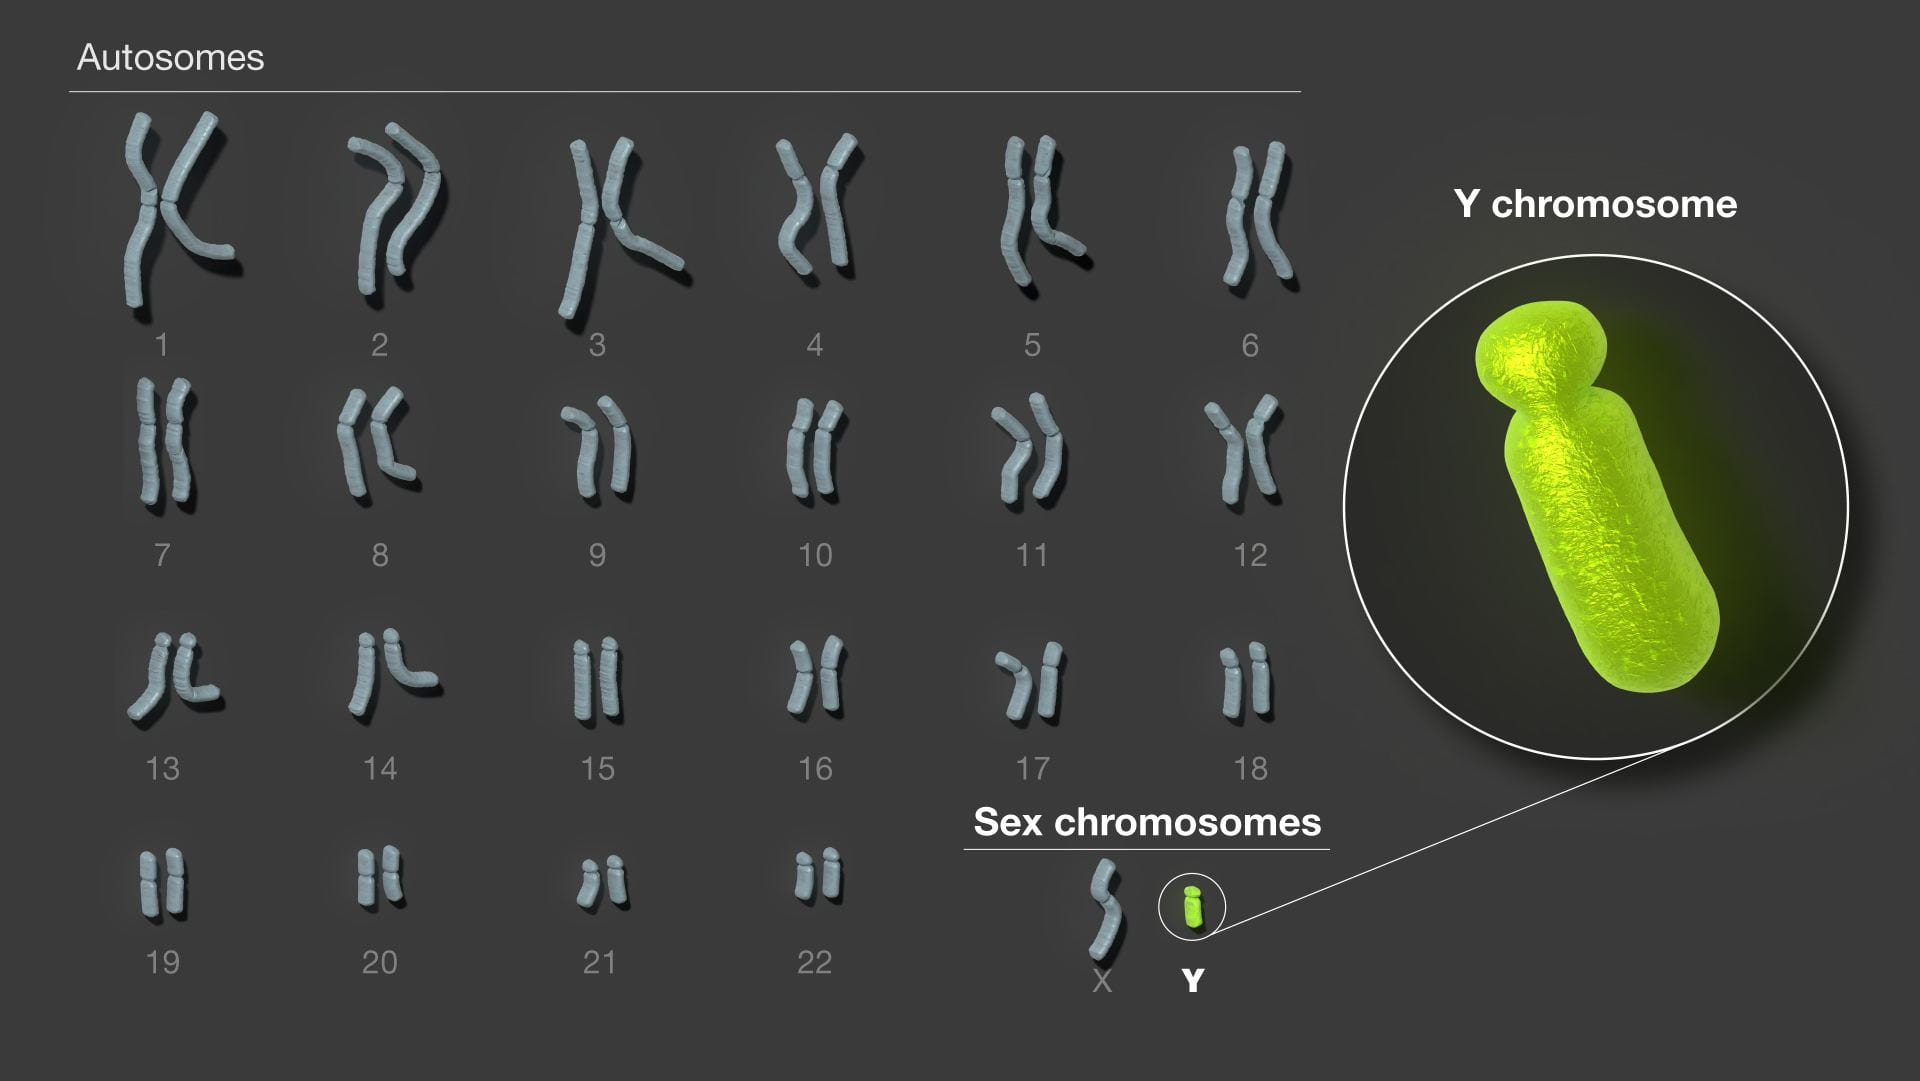 Human Karyotype highlighting the Y chromosome